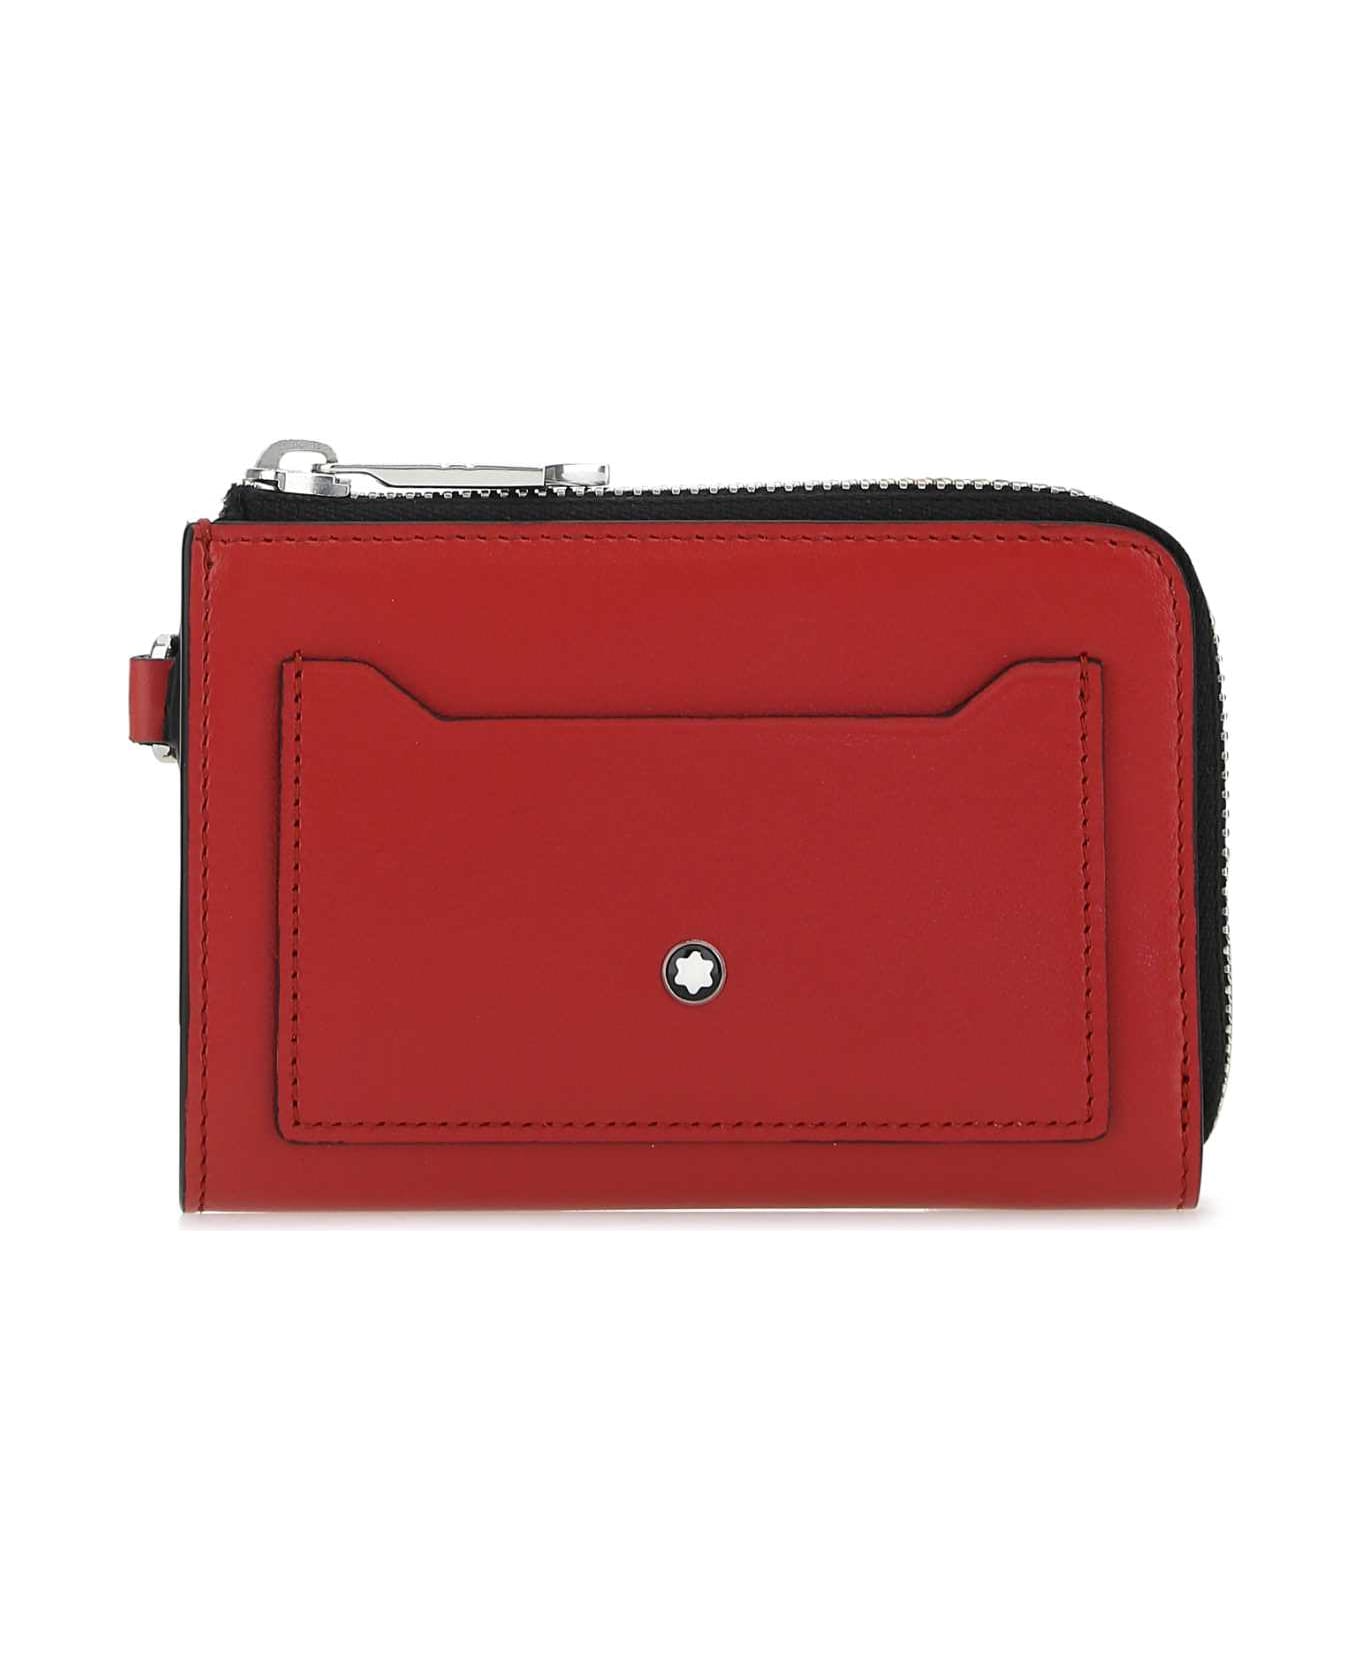 Montblanc Red Leather Meisterstã¼ck Card Holder - BLACKRED